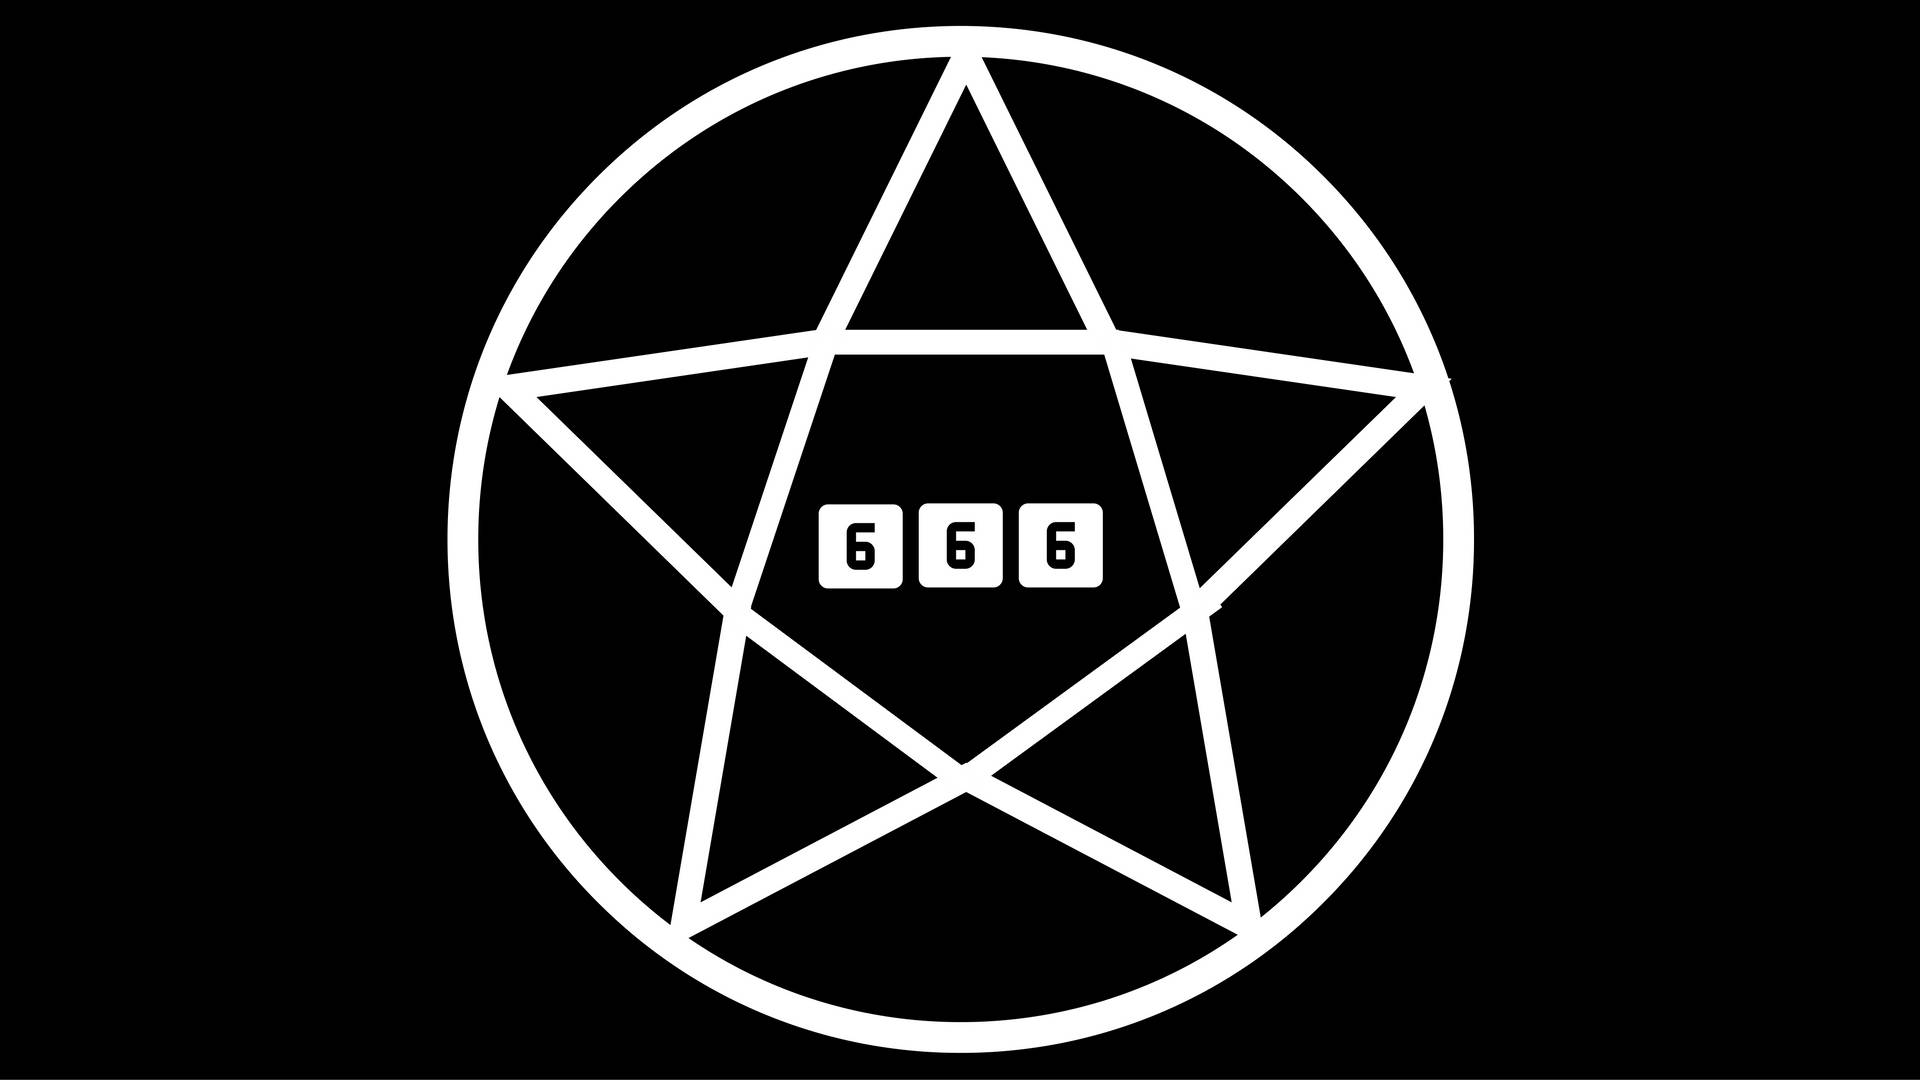 Minimalist 666 Pentagram Background